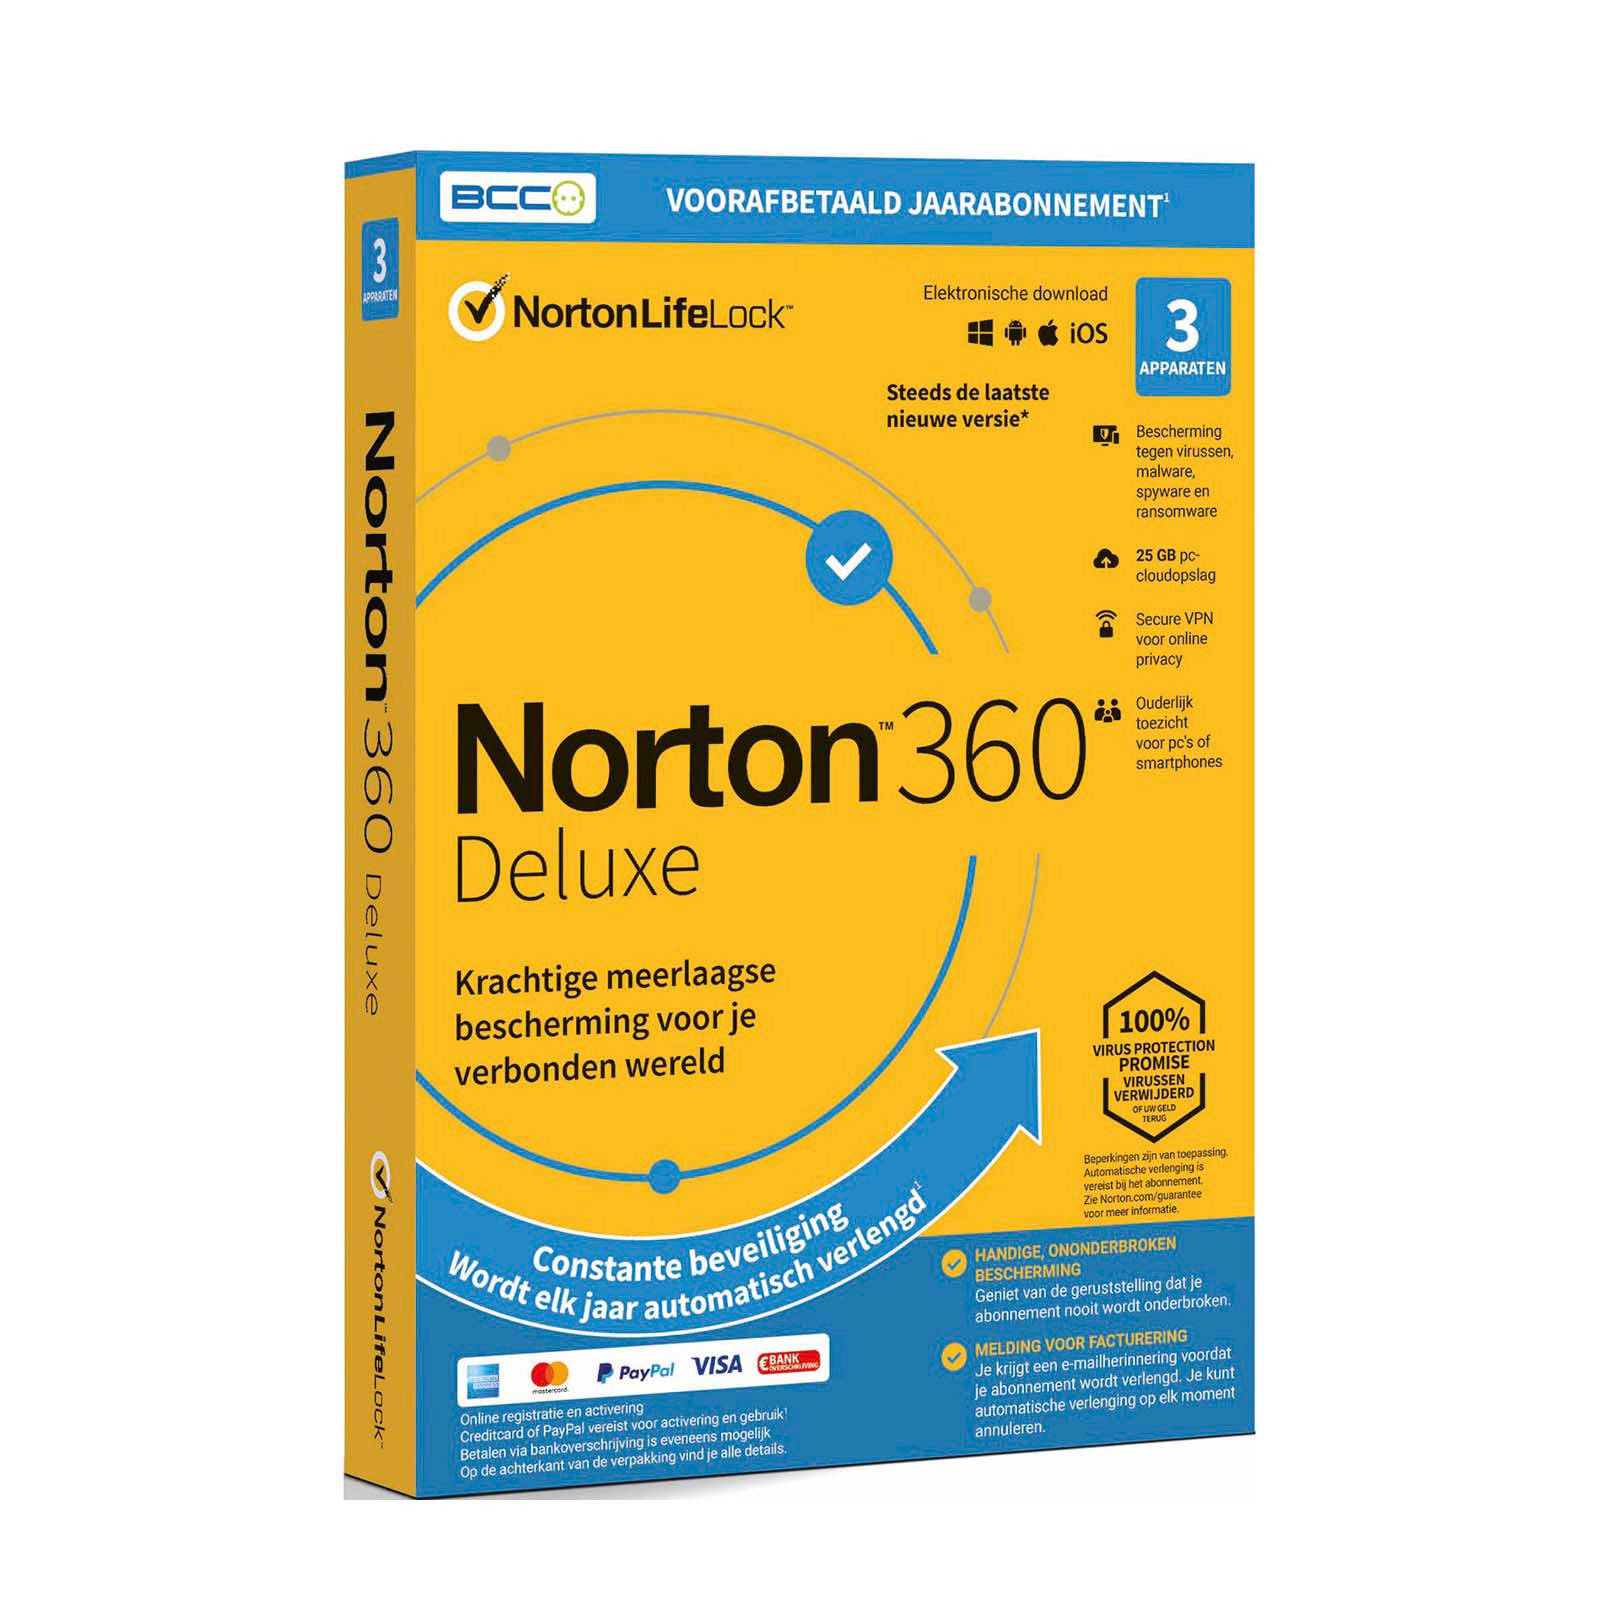 norton security 360 plan